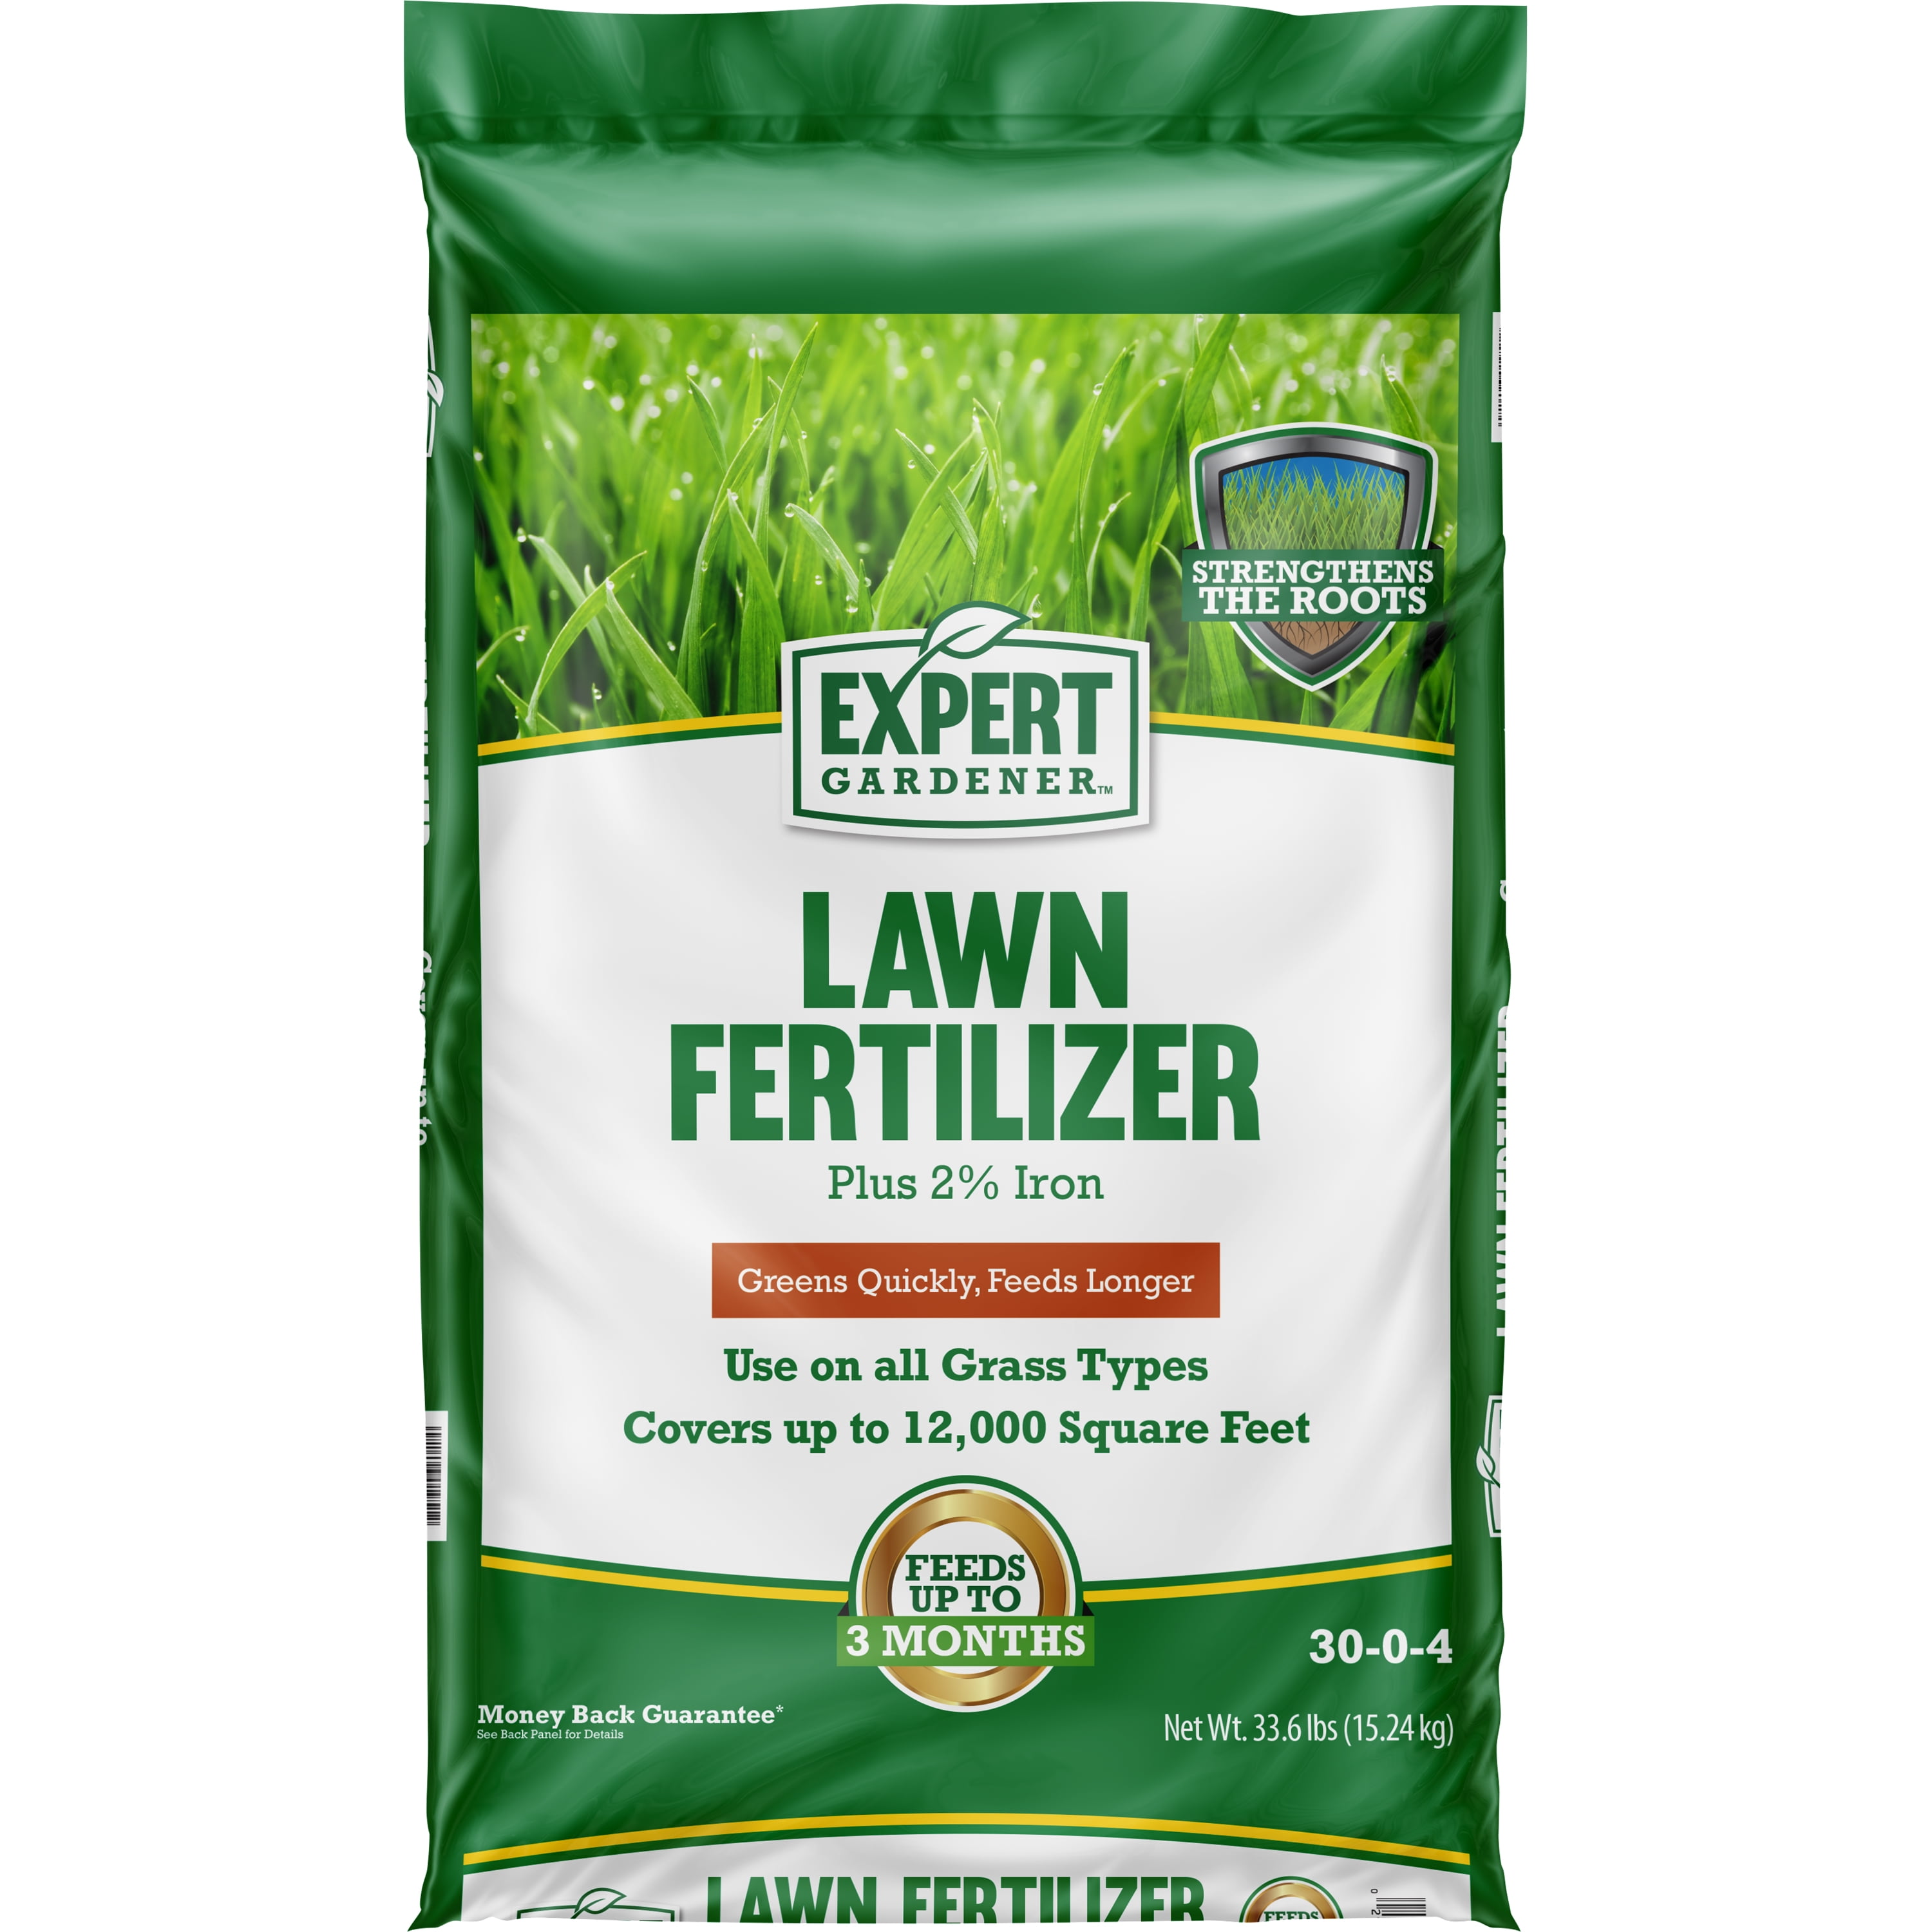 Image of Lesco Summer Lawn Food fertilizer image